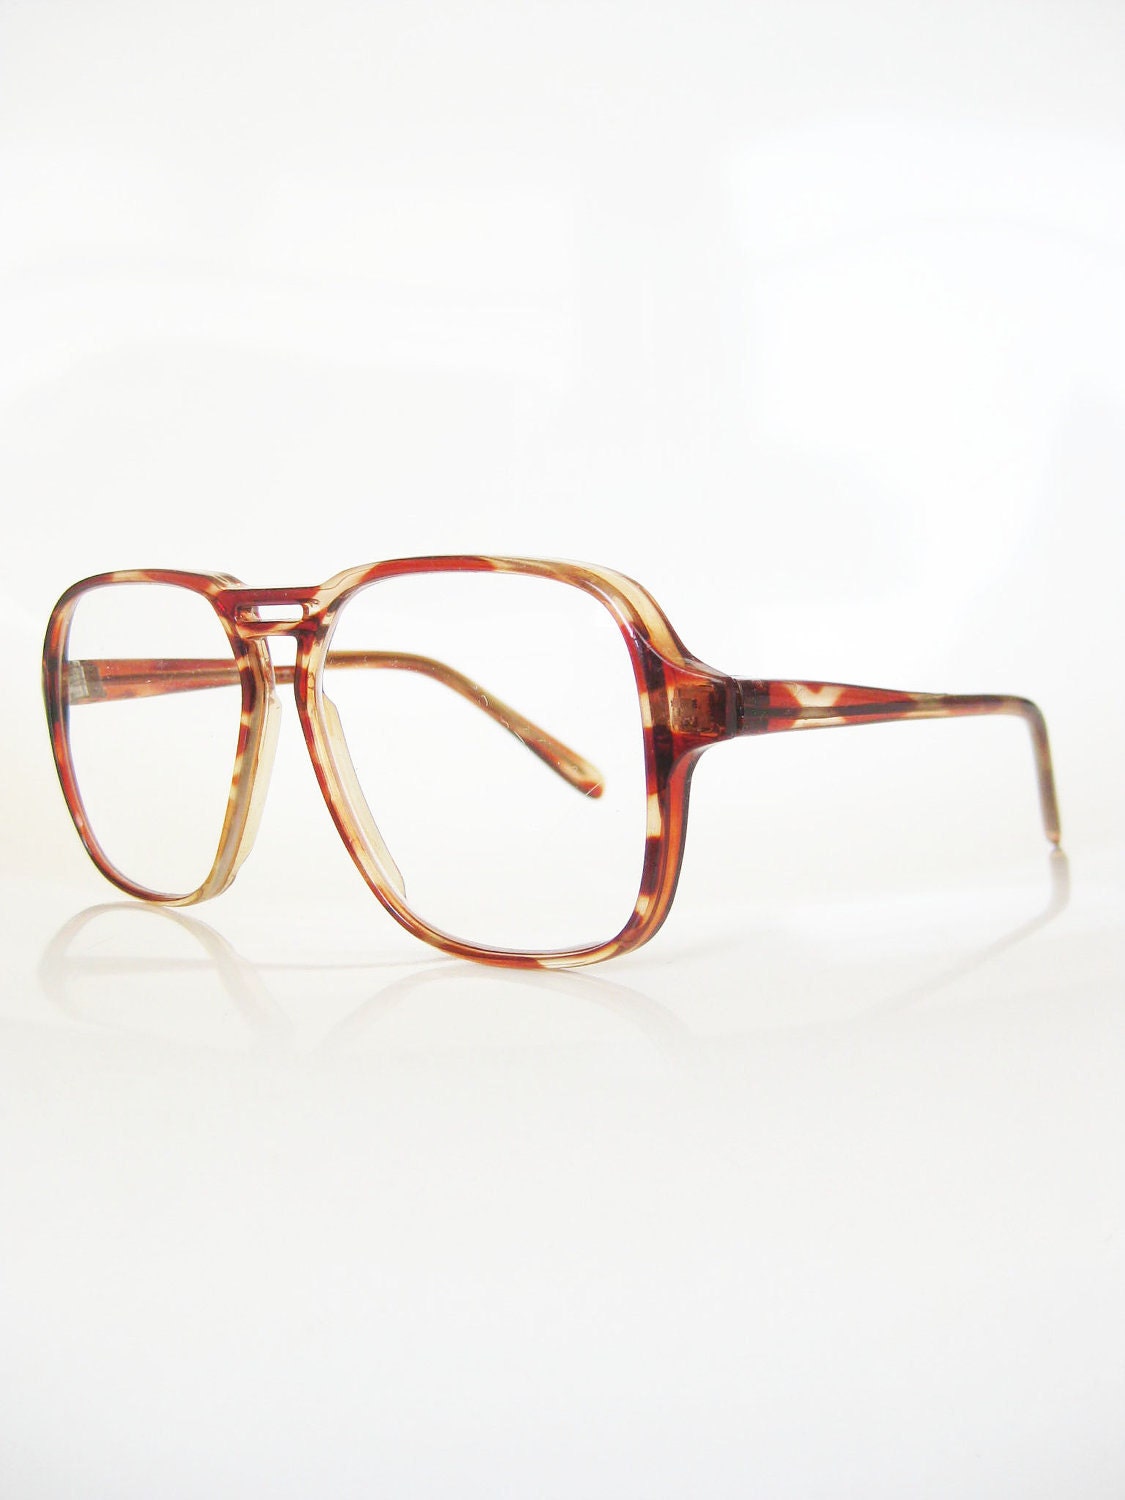 Vintage 1980s Aviator Eyeglasses Mens Glasses Optical Frames